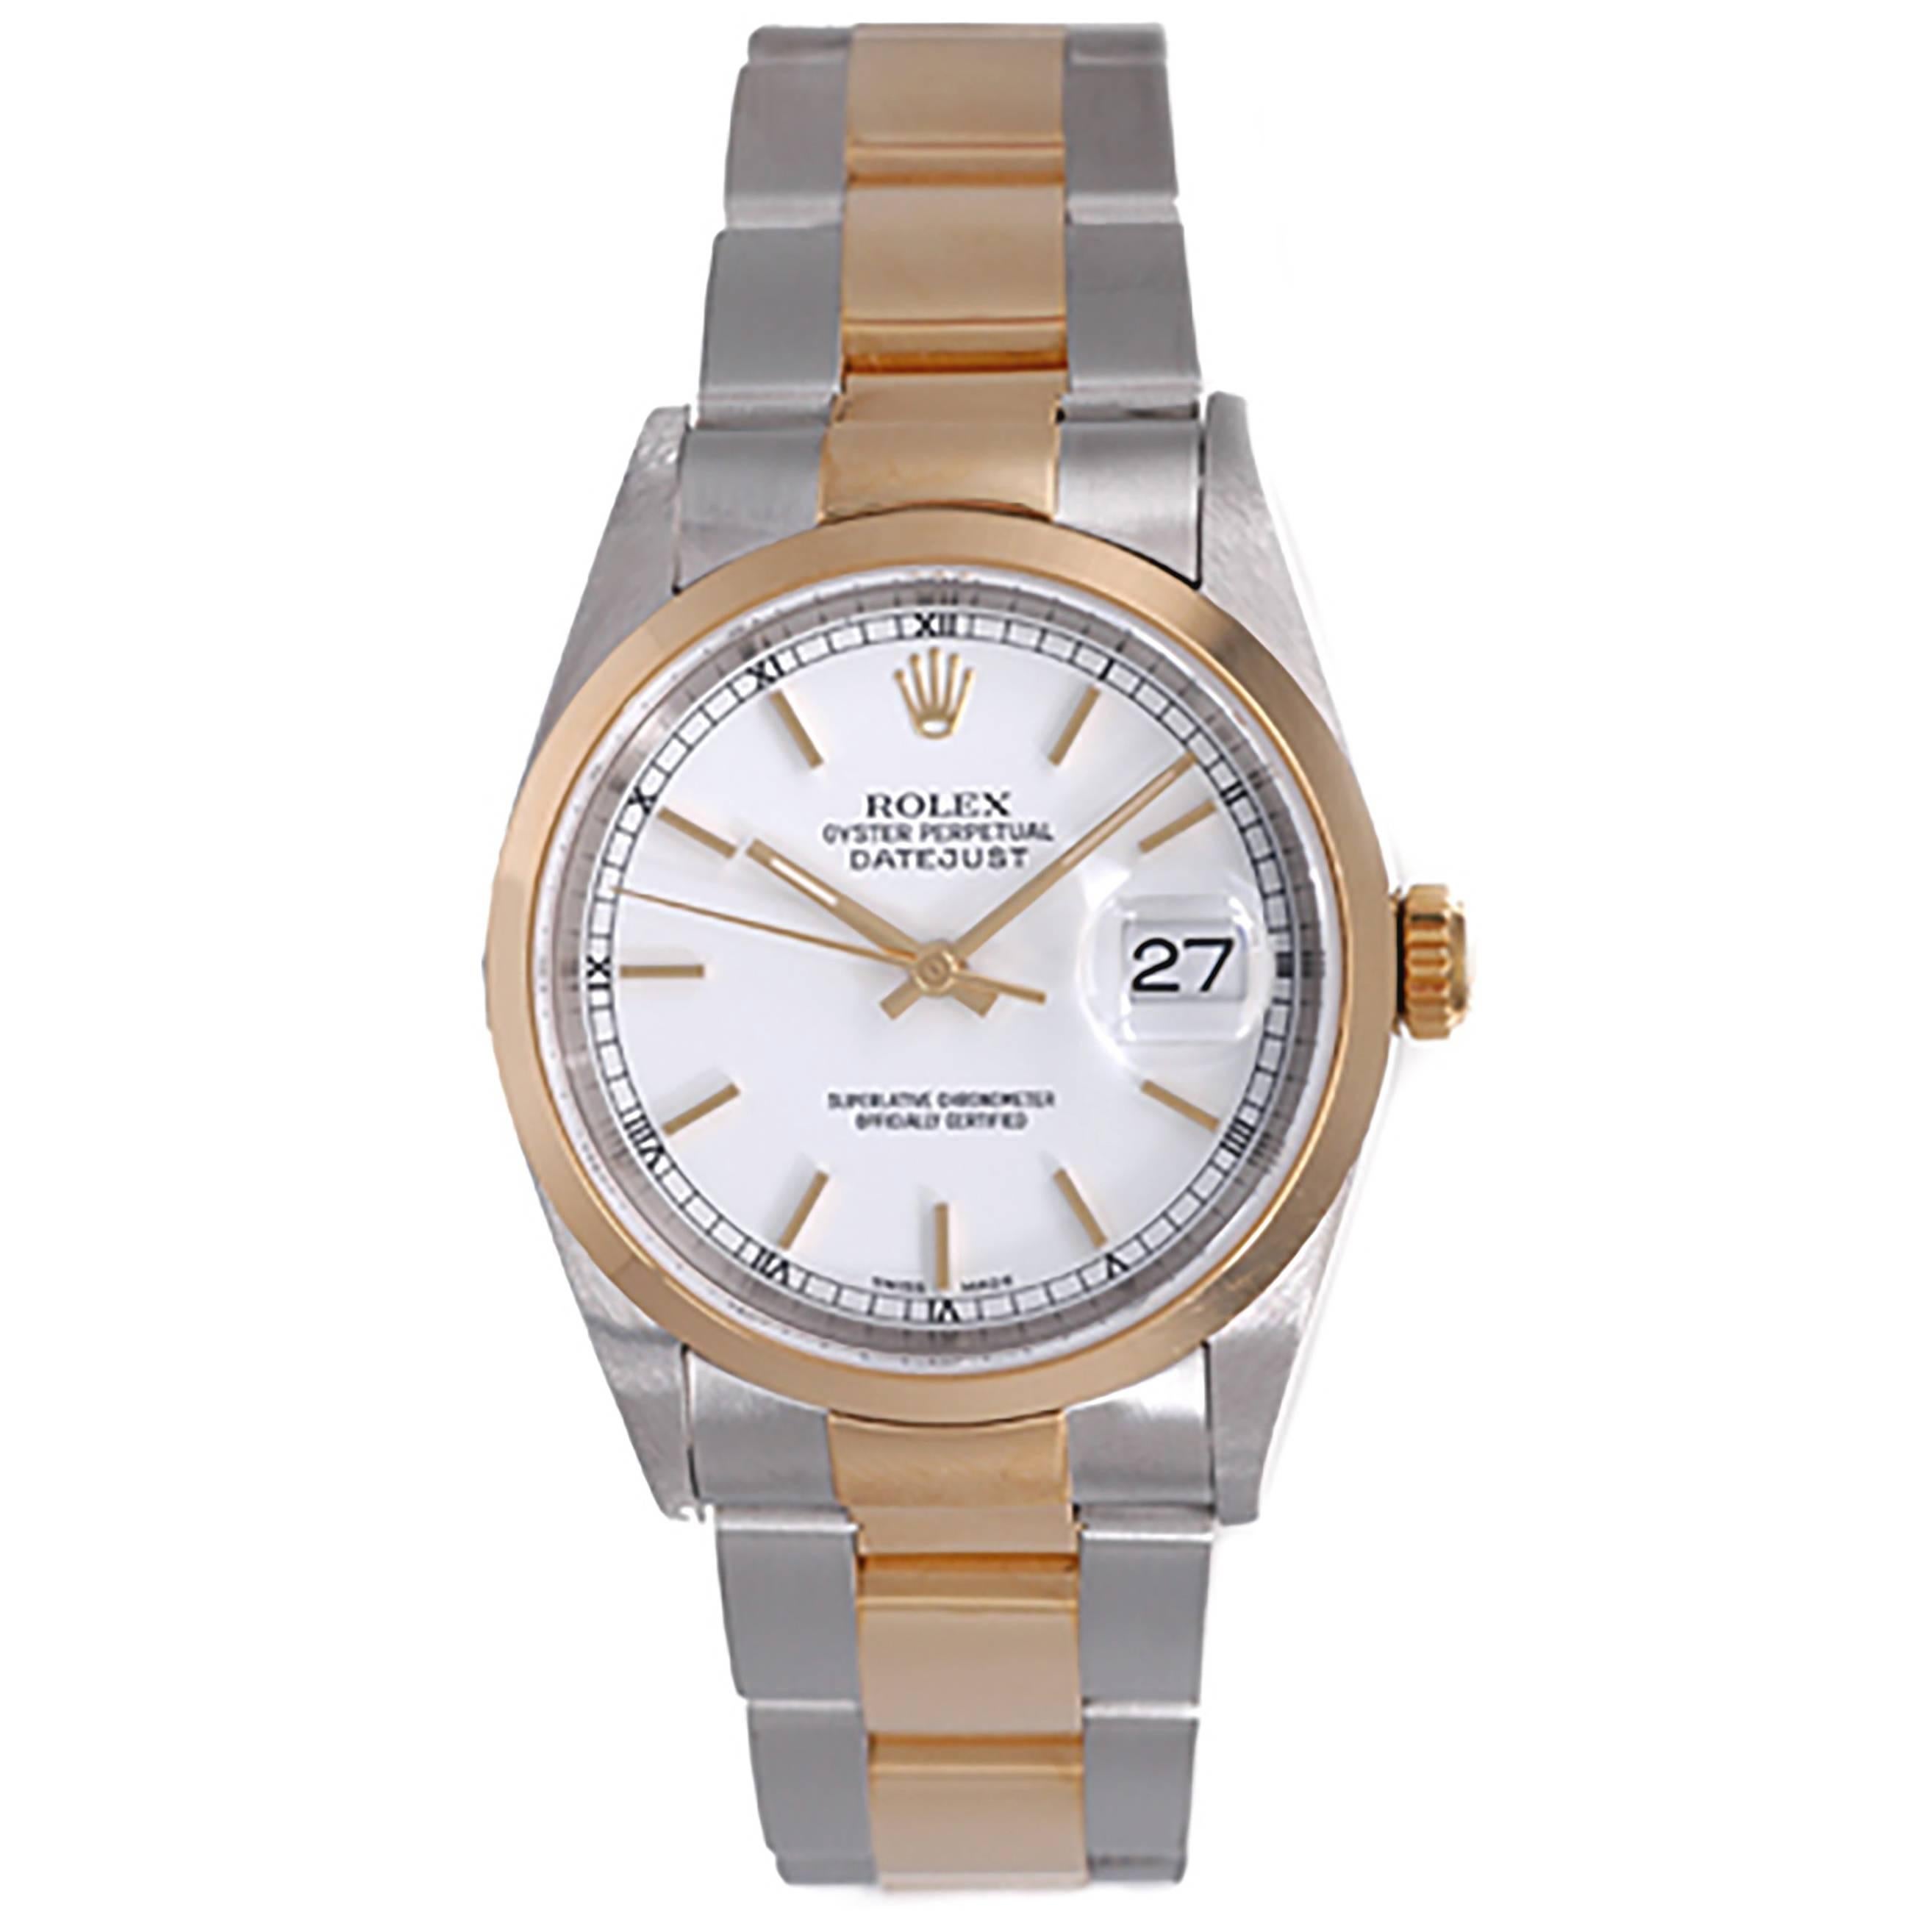 Rolex Stainless Steel Yellow Gold Datejust Jubilee Bracelet Automatic Wristwatch